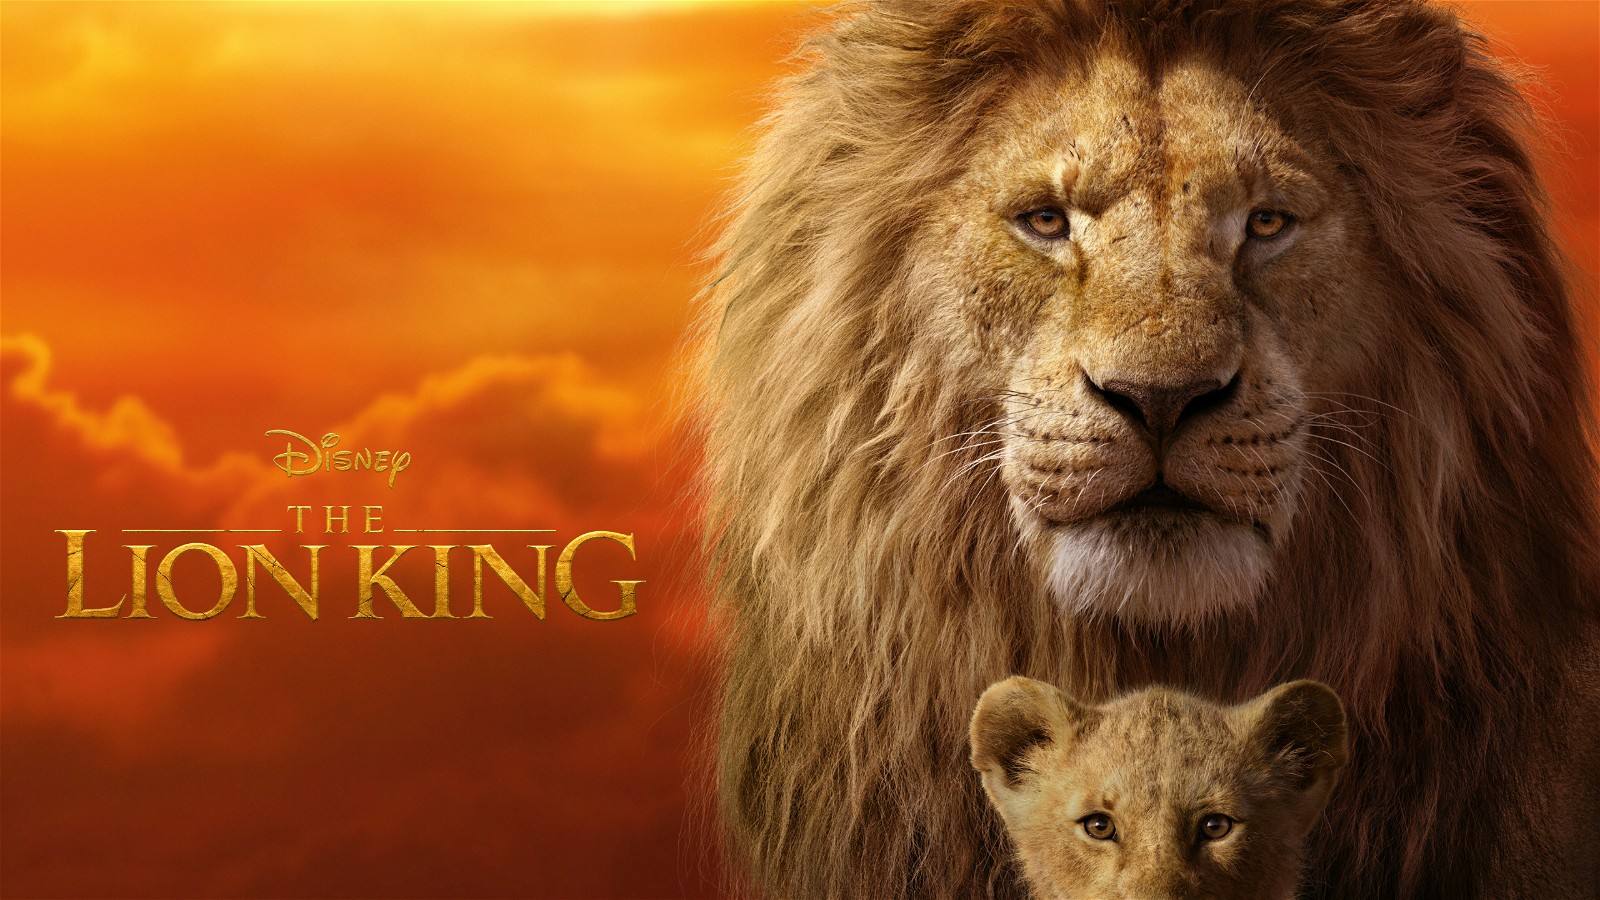 Disney's The Lion King 